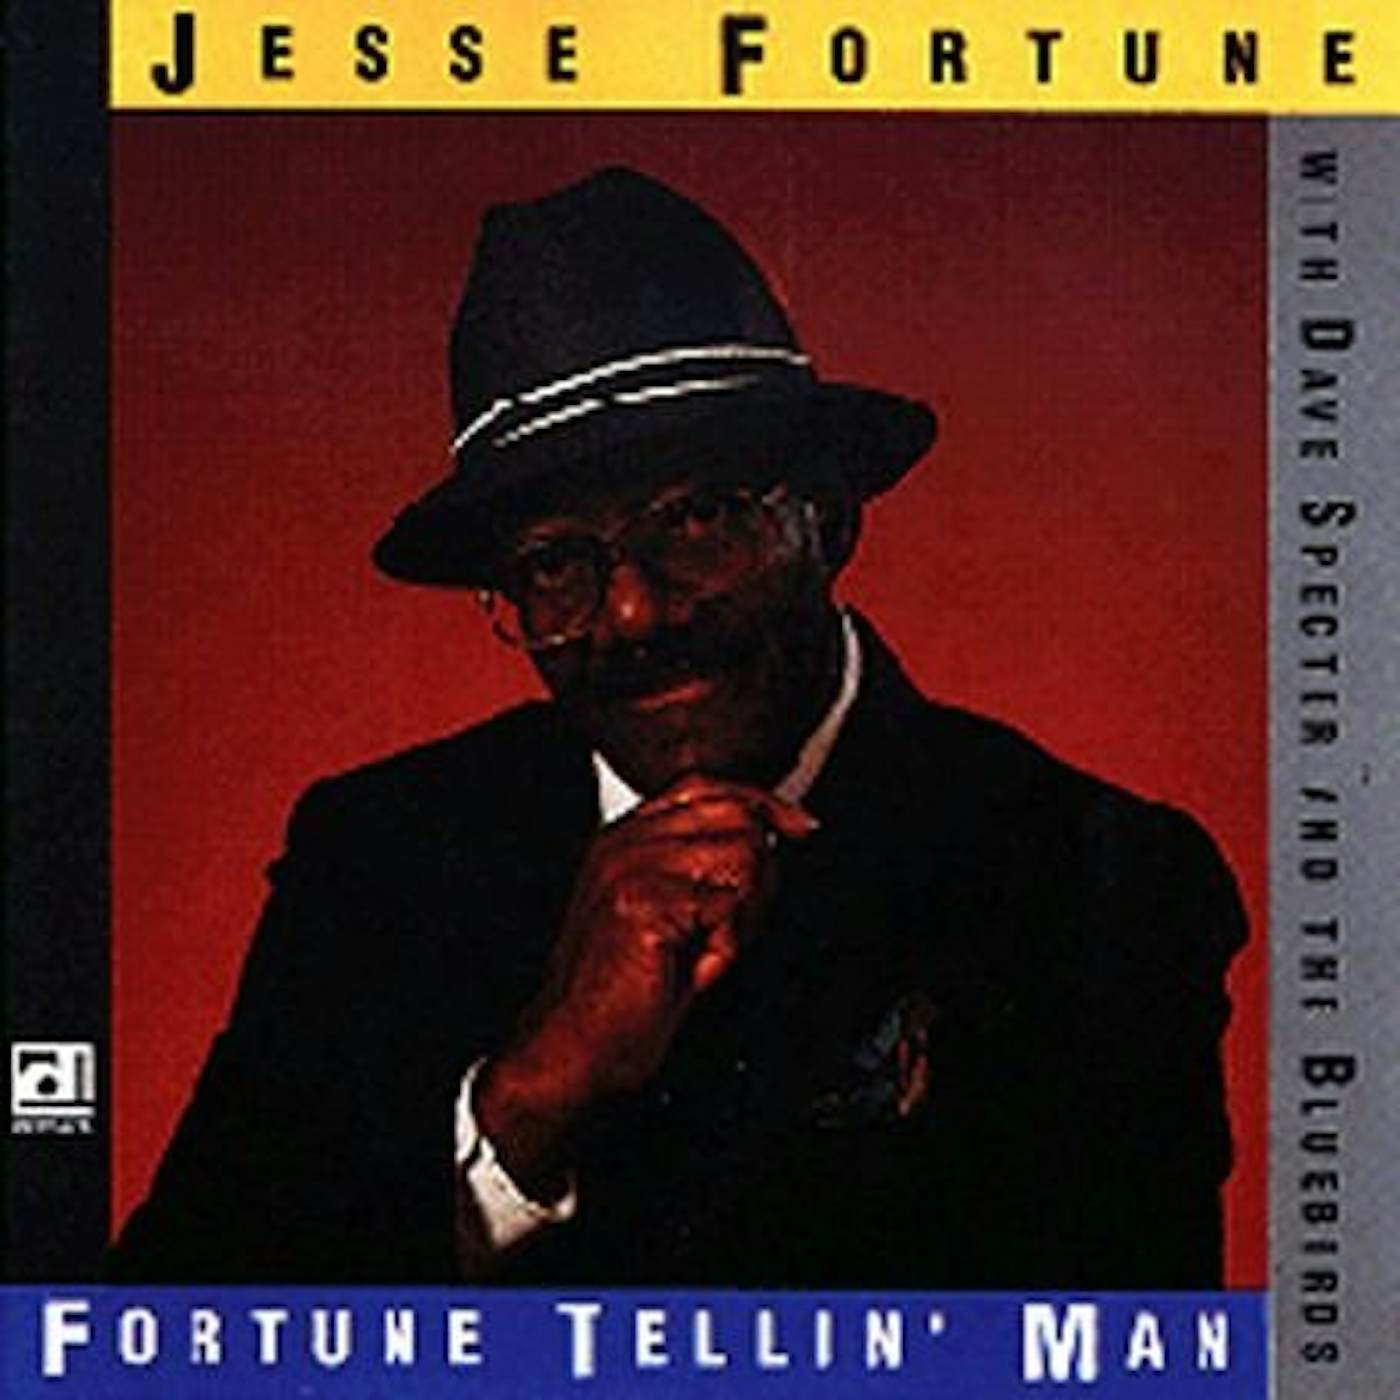 Jesse Fortune FORTUNE TELLIN' MAN CD